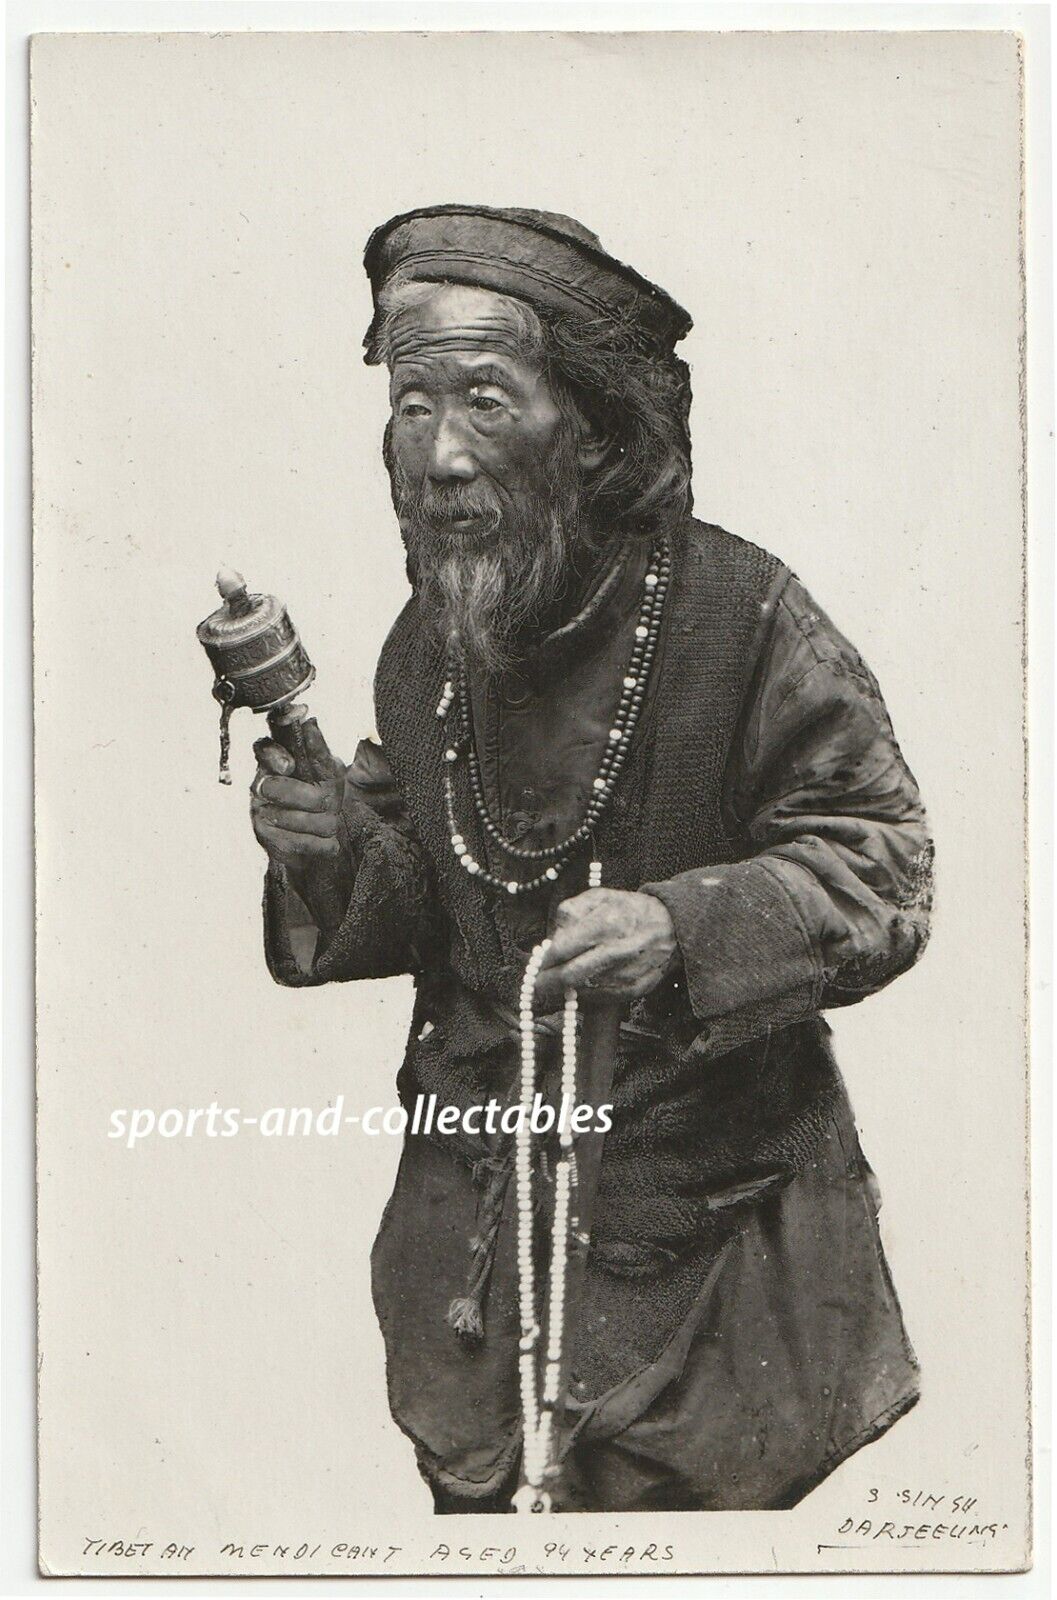 TIBET, C.A.R: TIBETAN BEGGAR, AGED 94 - c1910s rppc - S.SINGH (Darjeeling) Photo